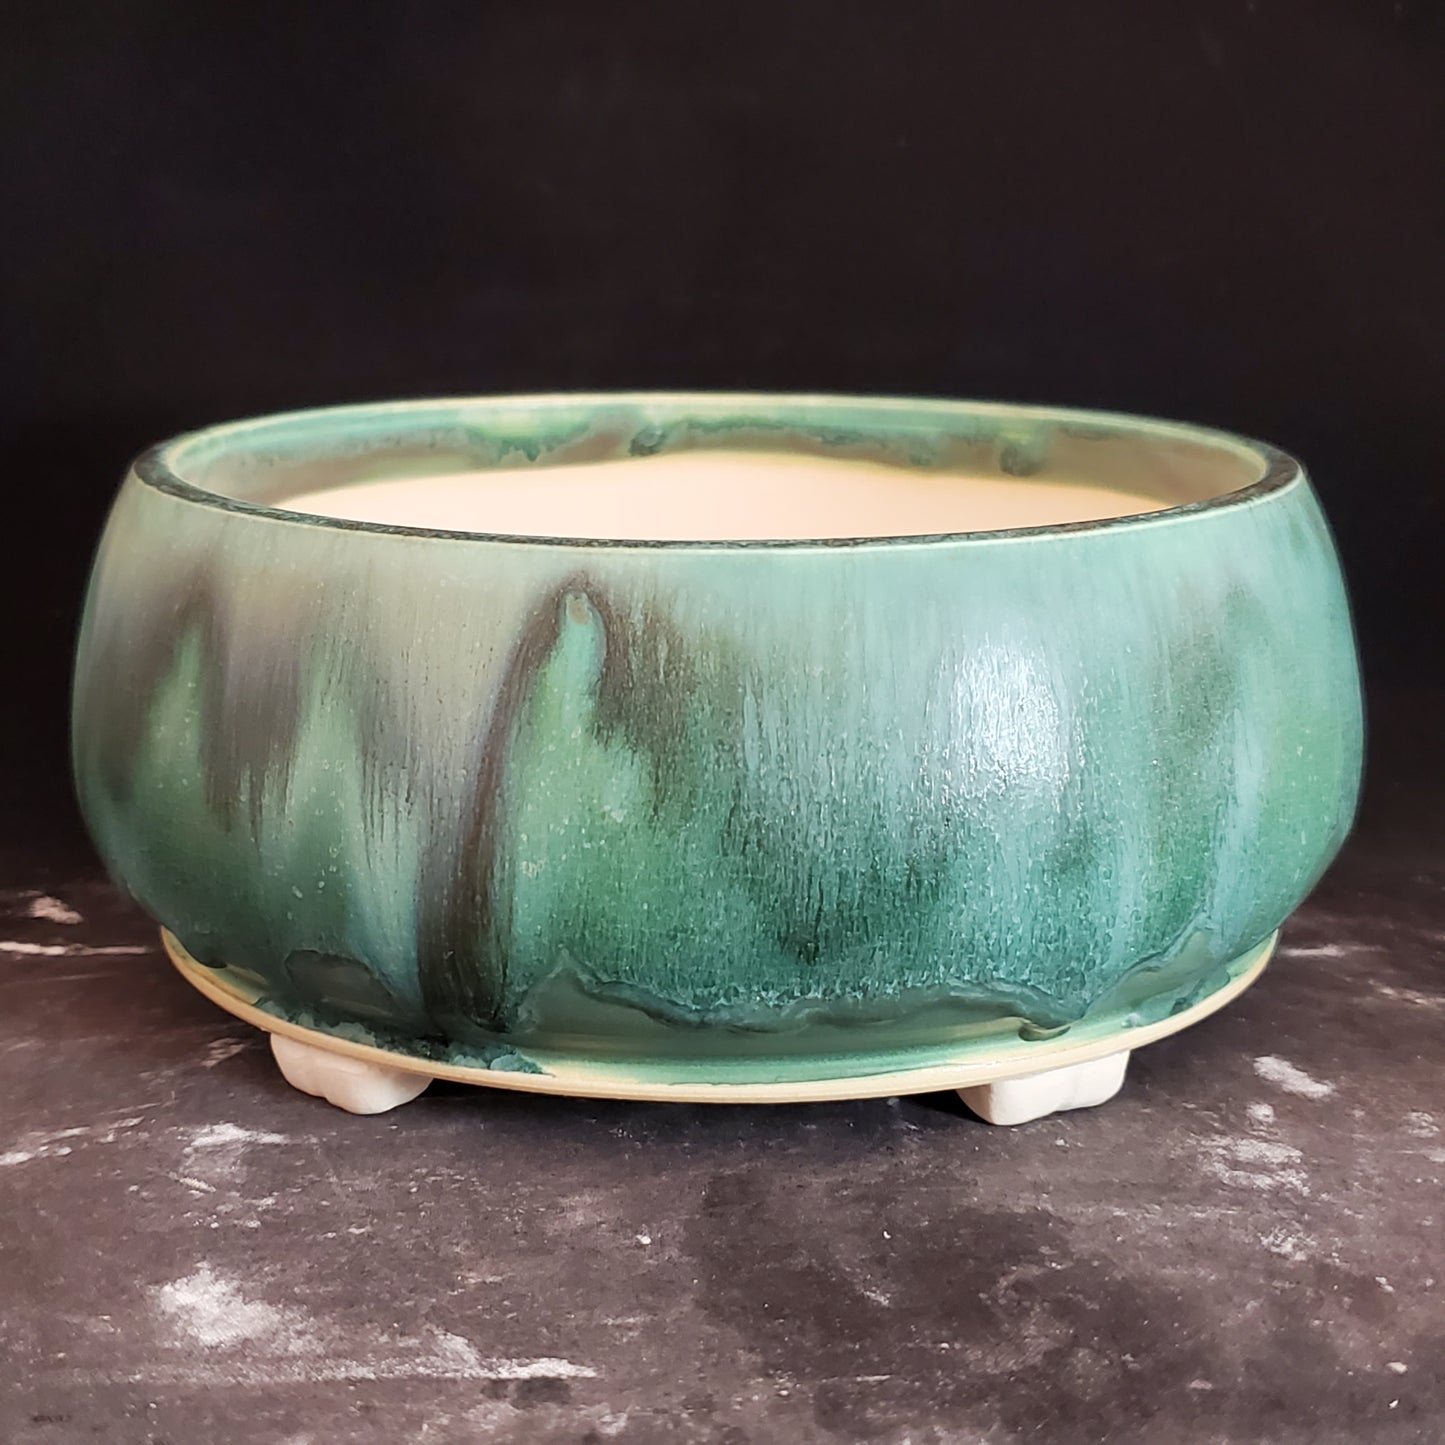 Bonsai Pot Round 10-23-1309 [6.5"x 2.75"]